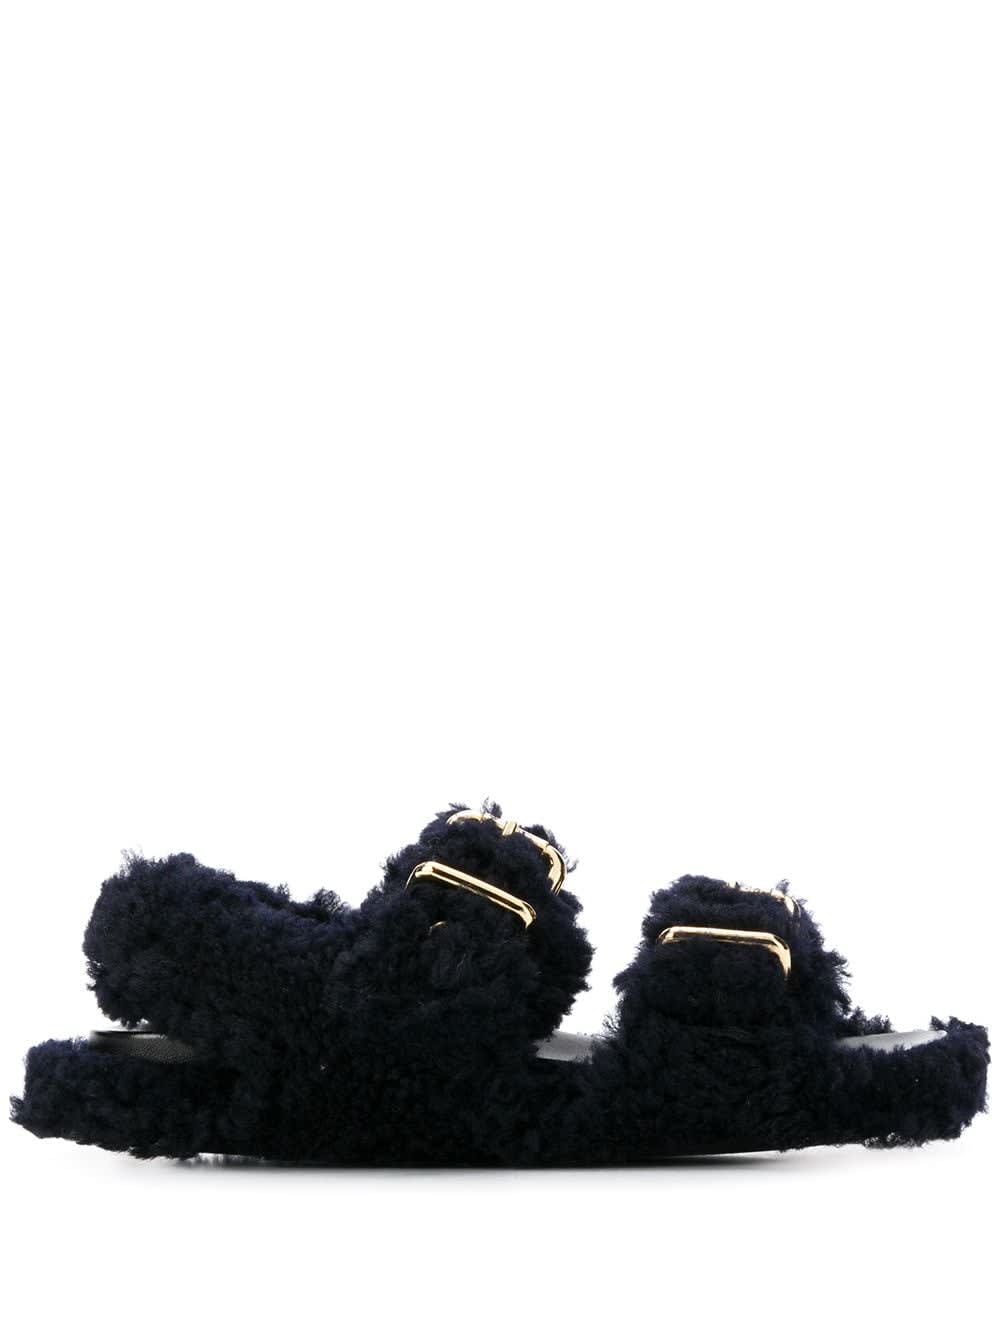 Buy Marni Woman Black Shearling Flat Sandal online, shop Marni shoes with free shipping